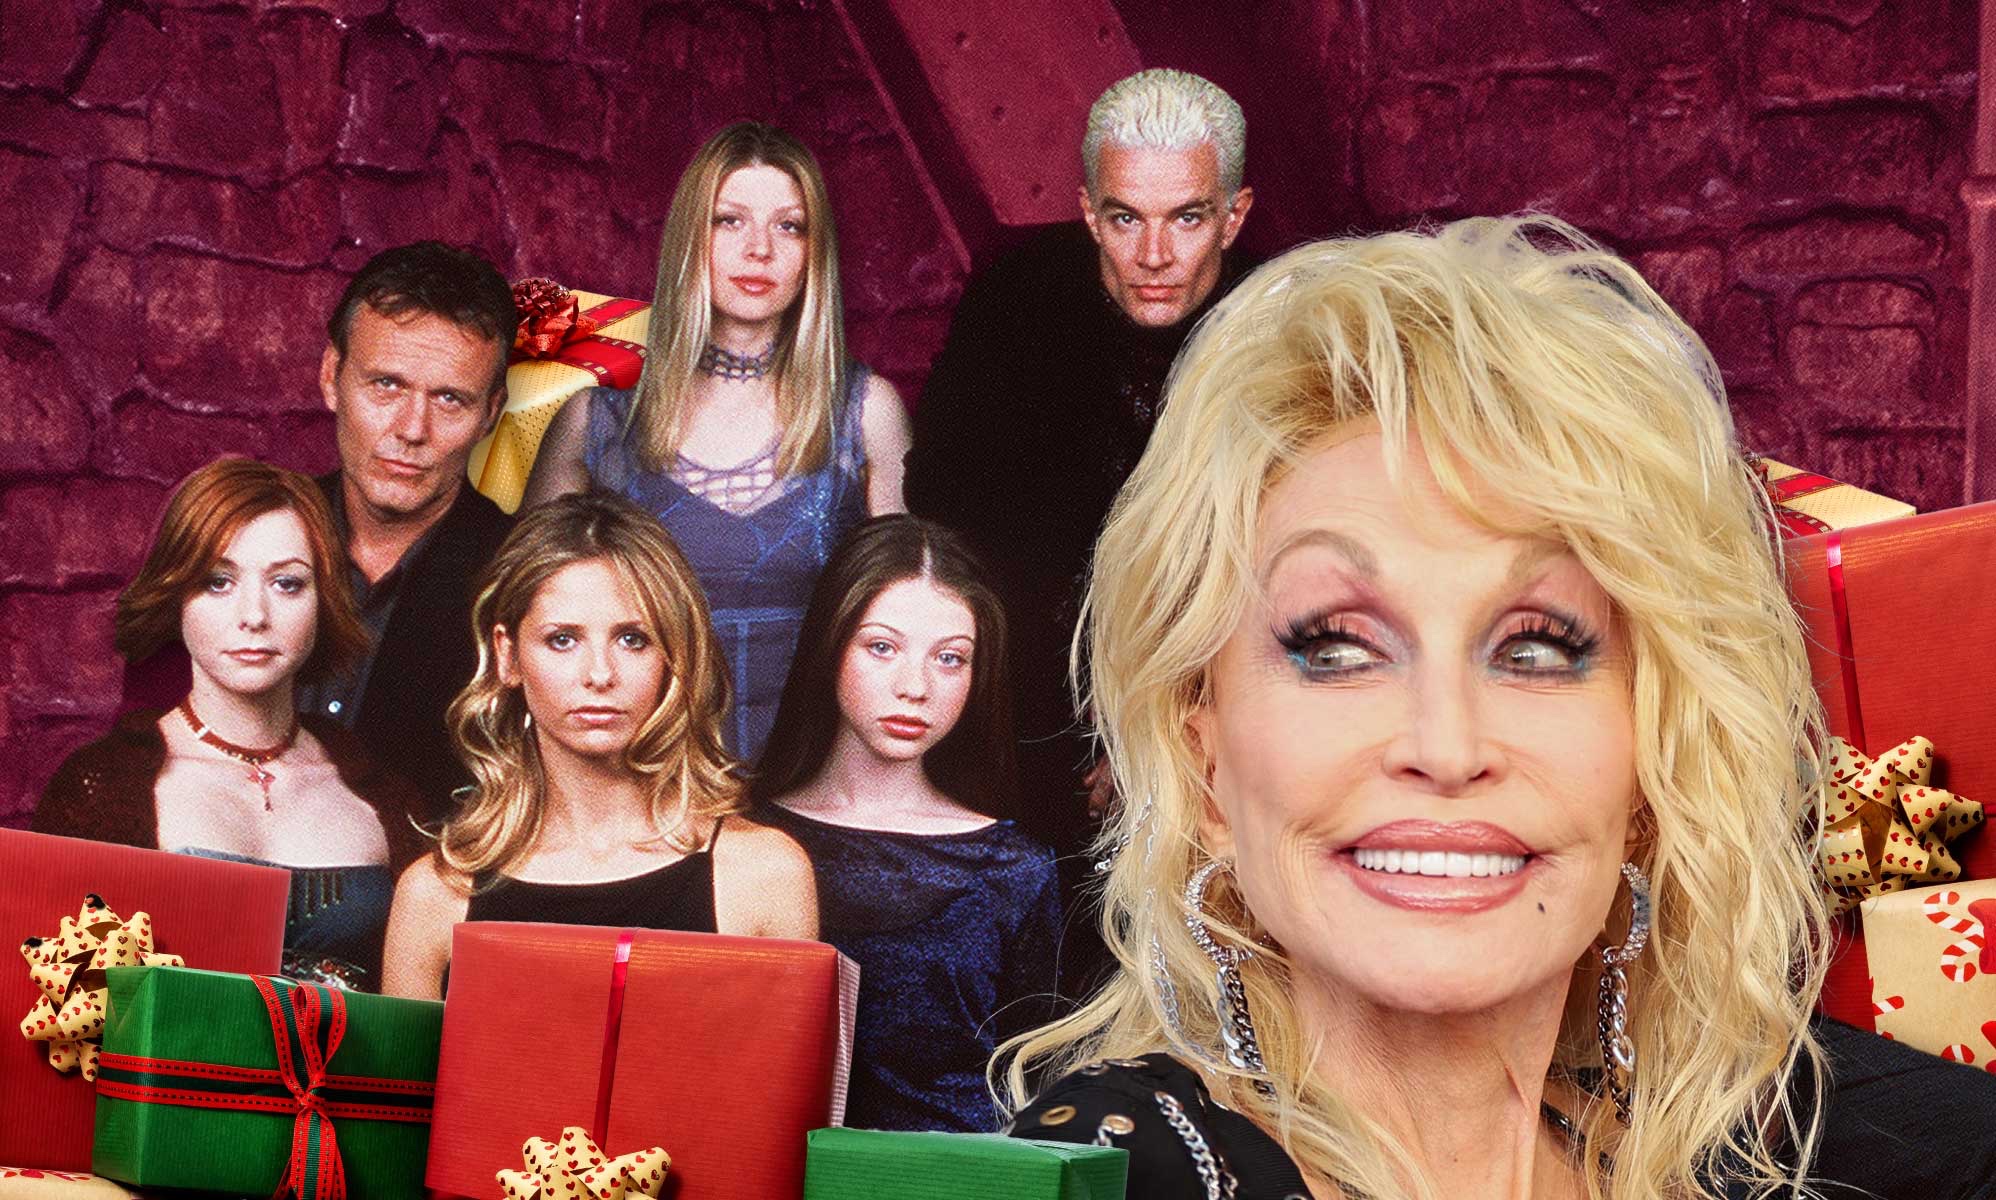 Dolly Parton Having Sex - Sarah Michelle Gellar reveals Dolly Parton was a producer on Buffy